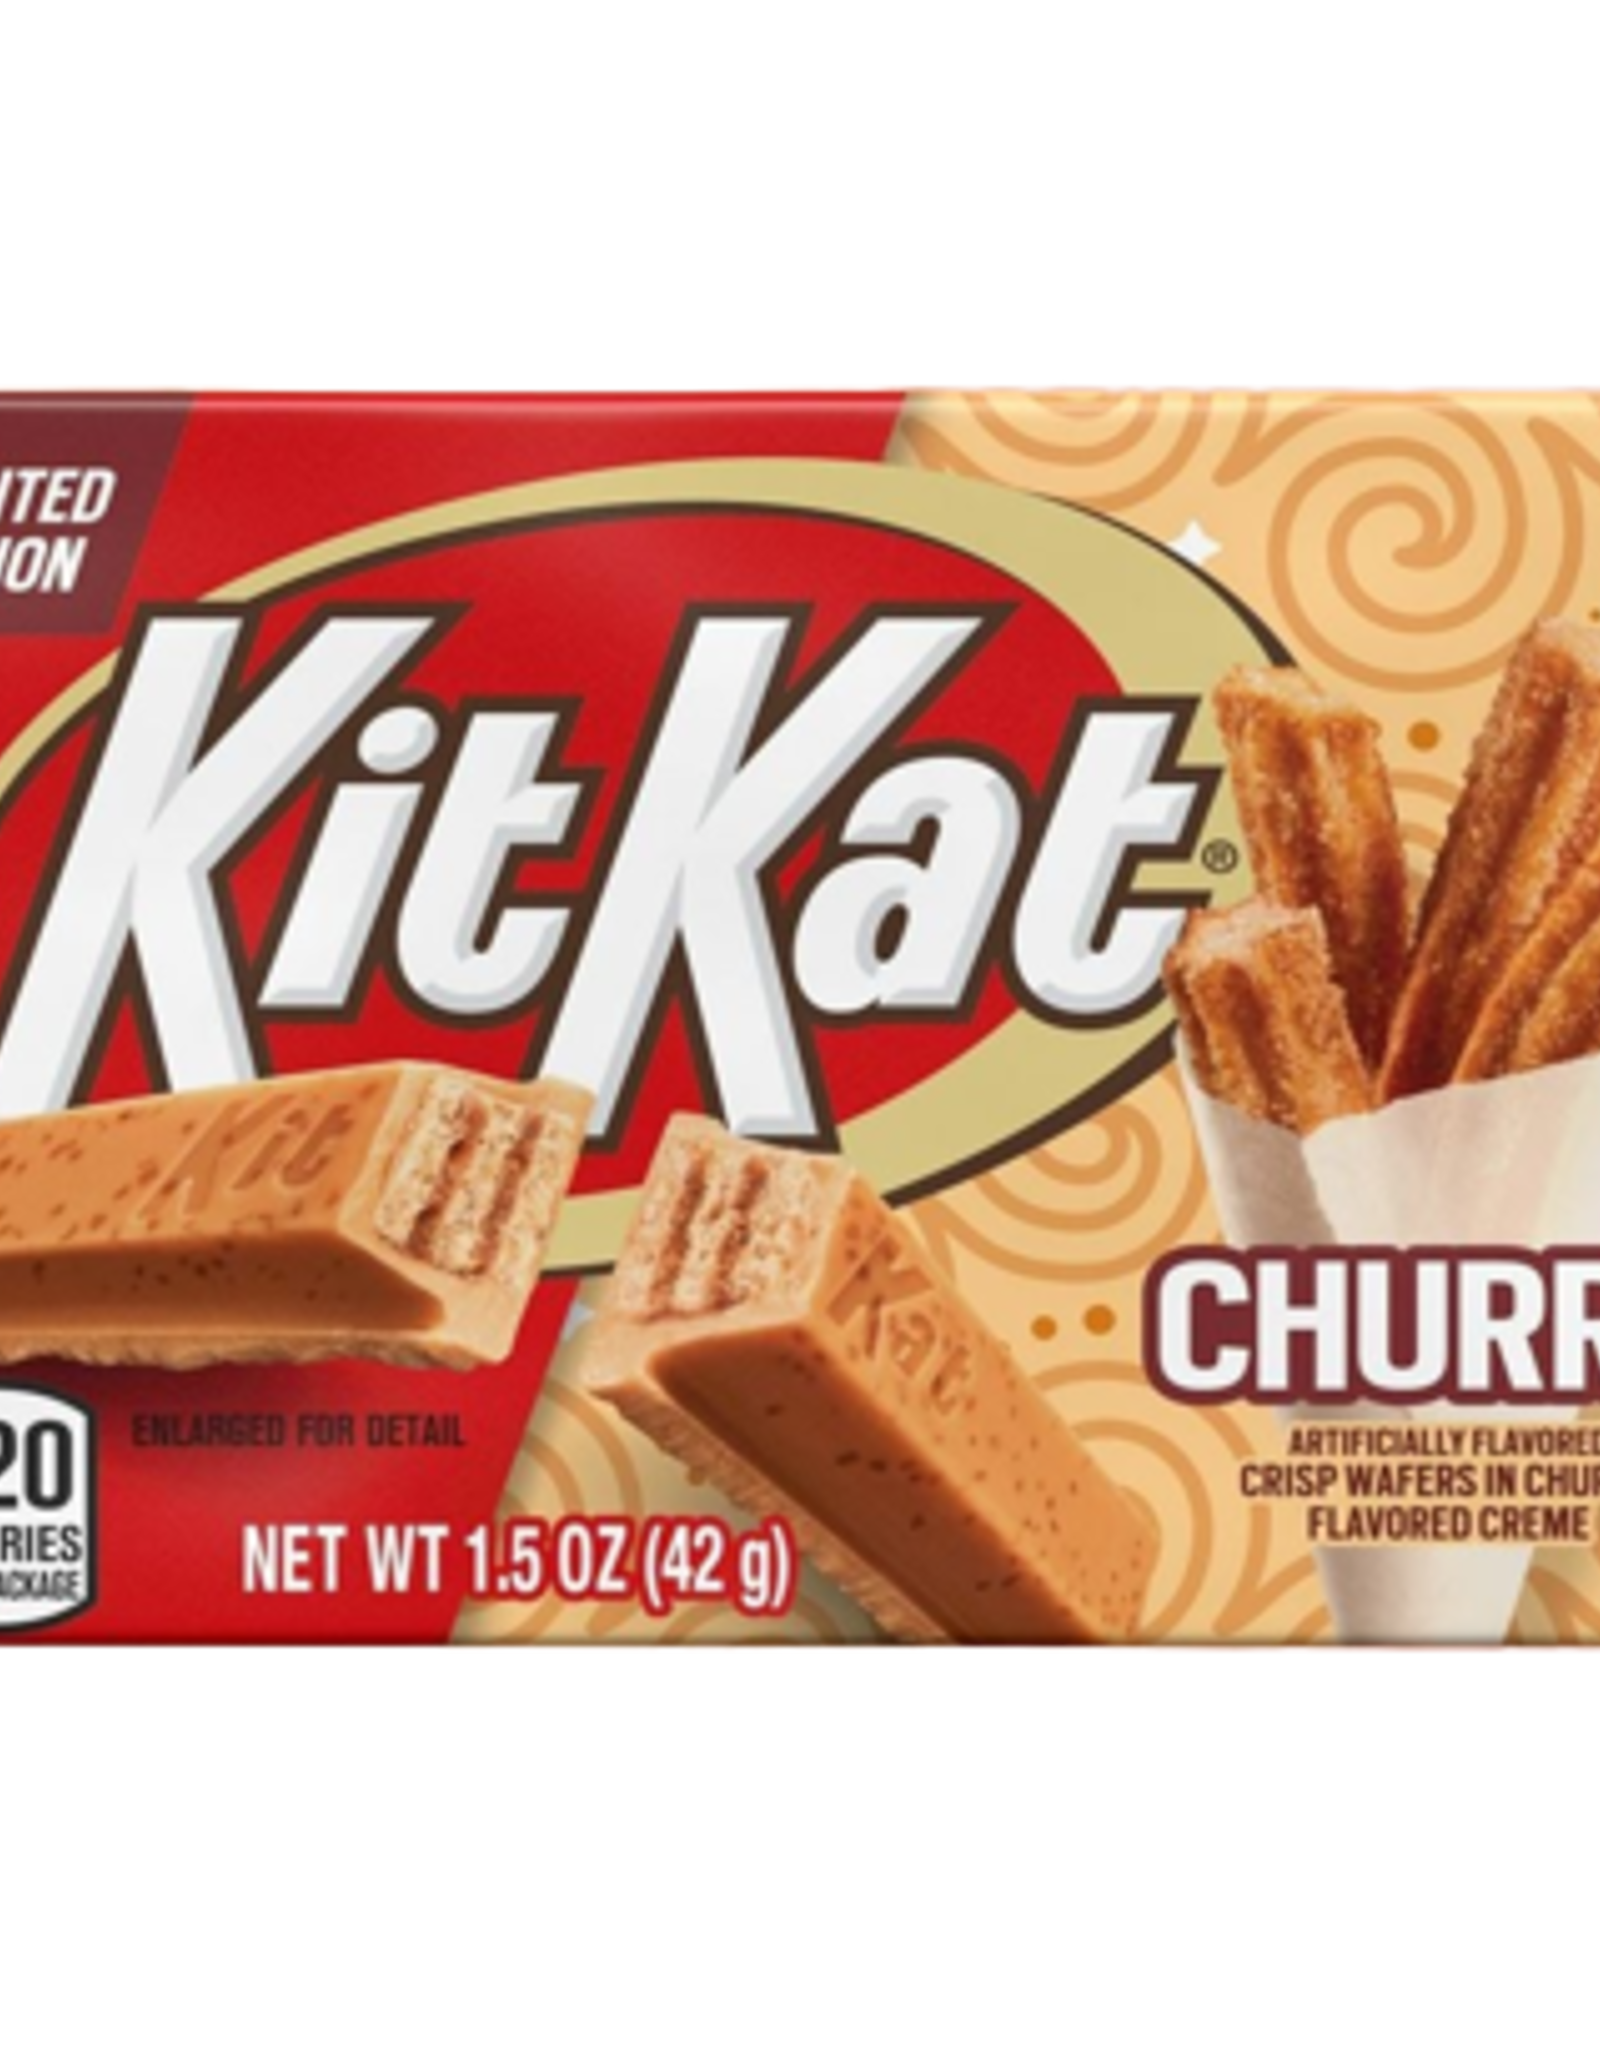 Hershey Kit Kat Limited Edition Churro